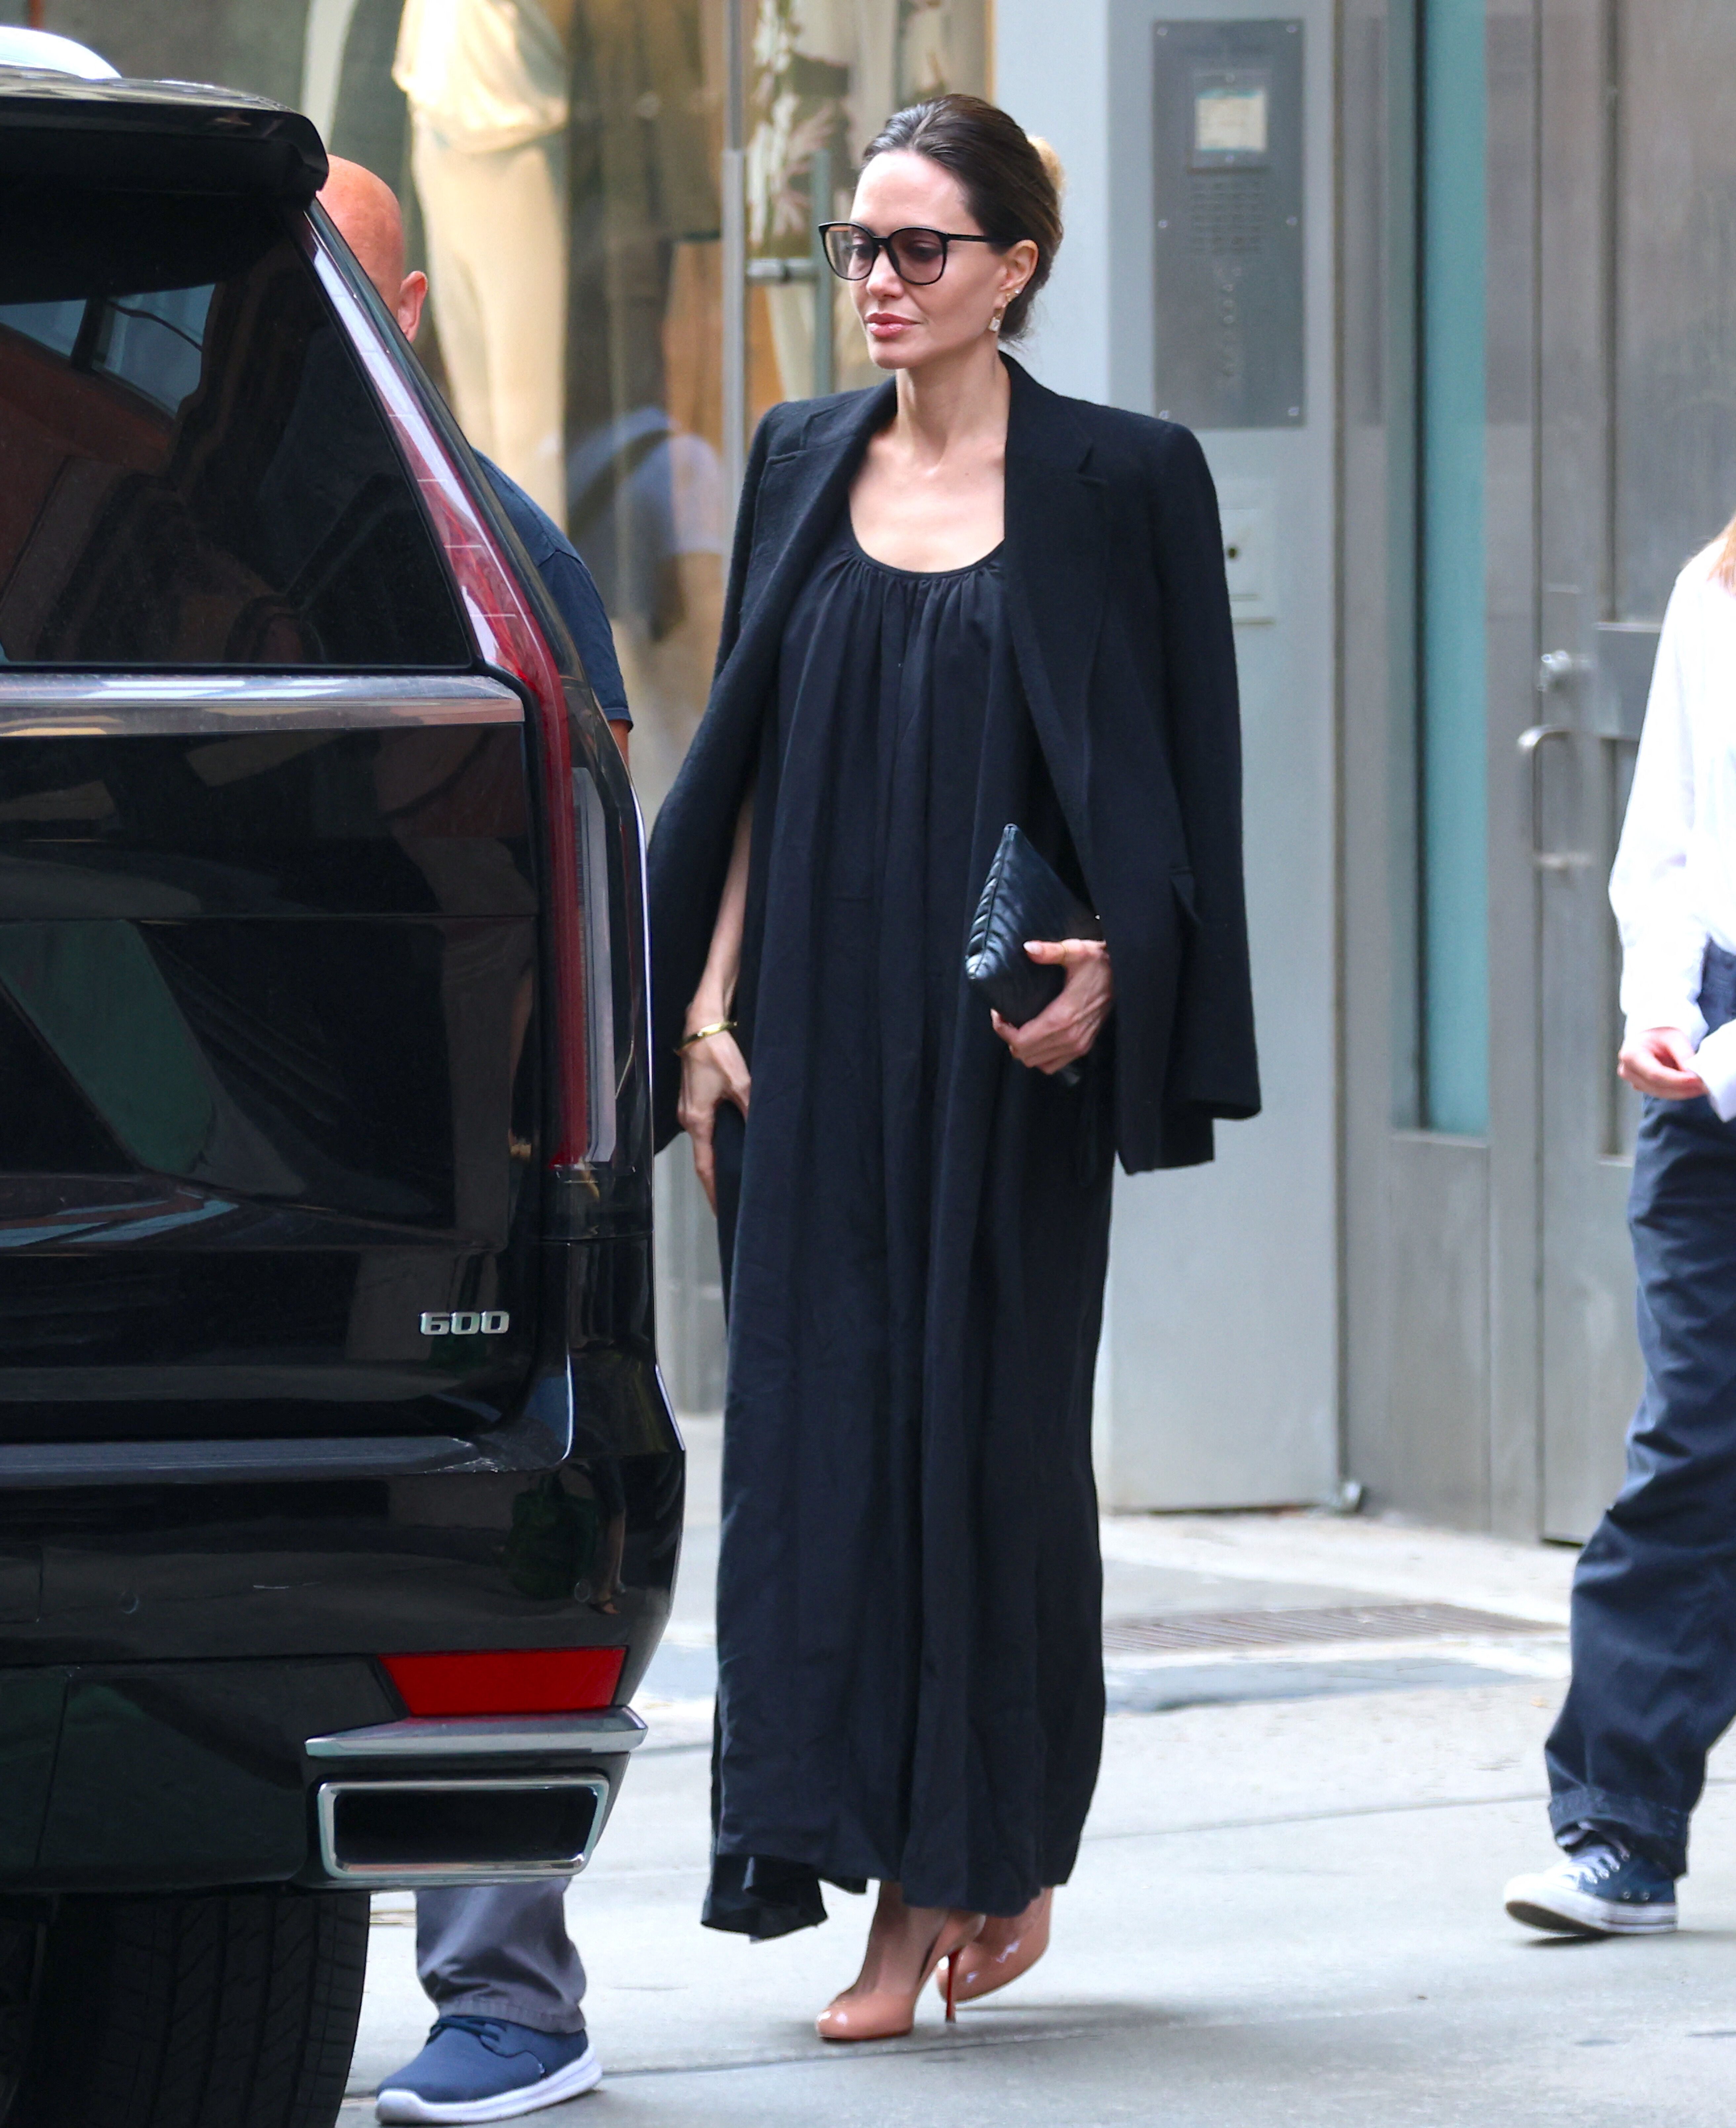 angelina jolie looks classy in a long black coat as she goes